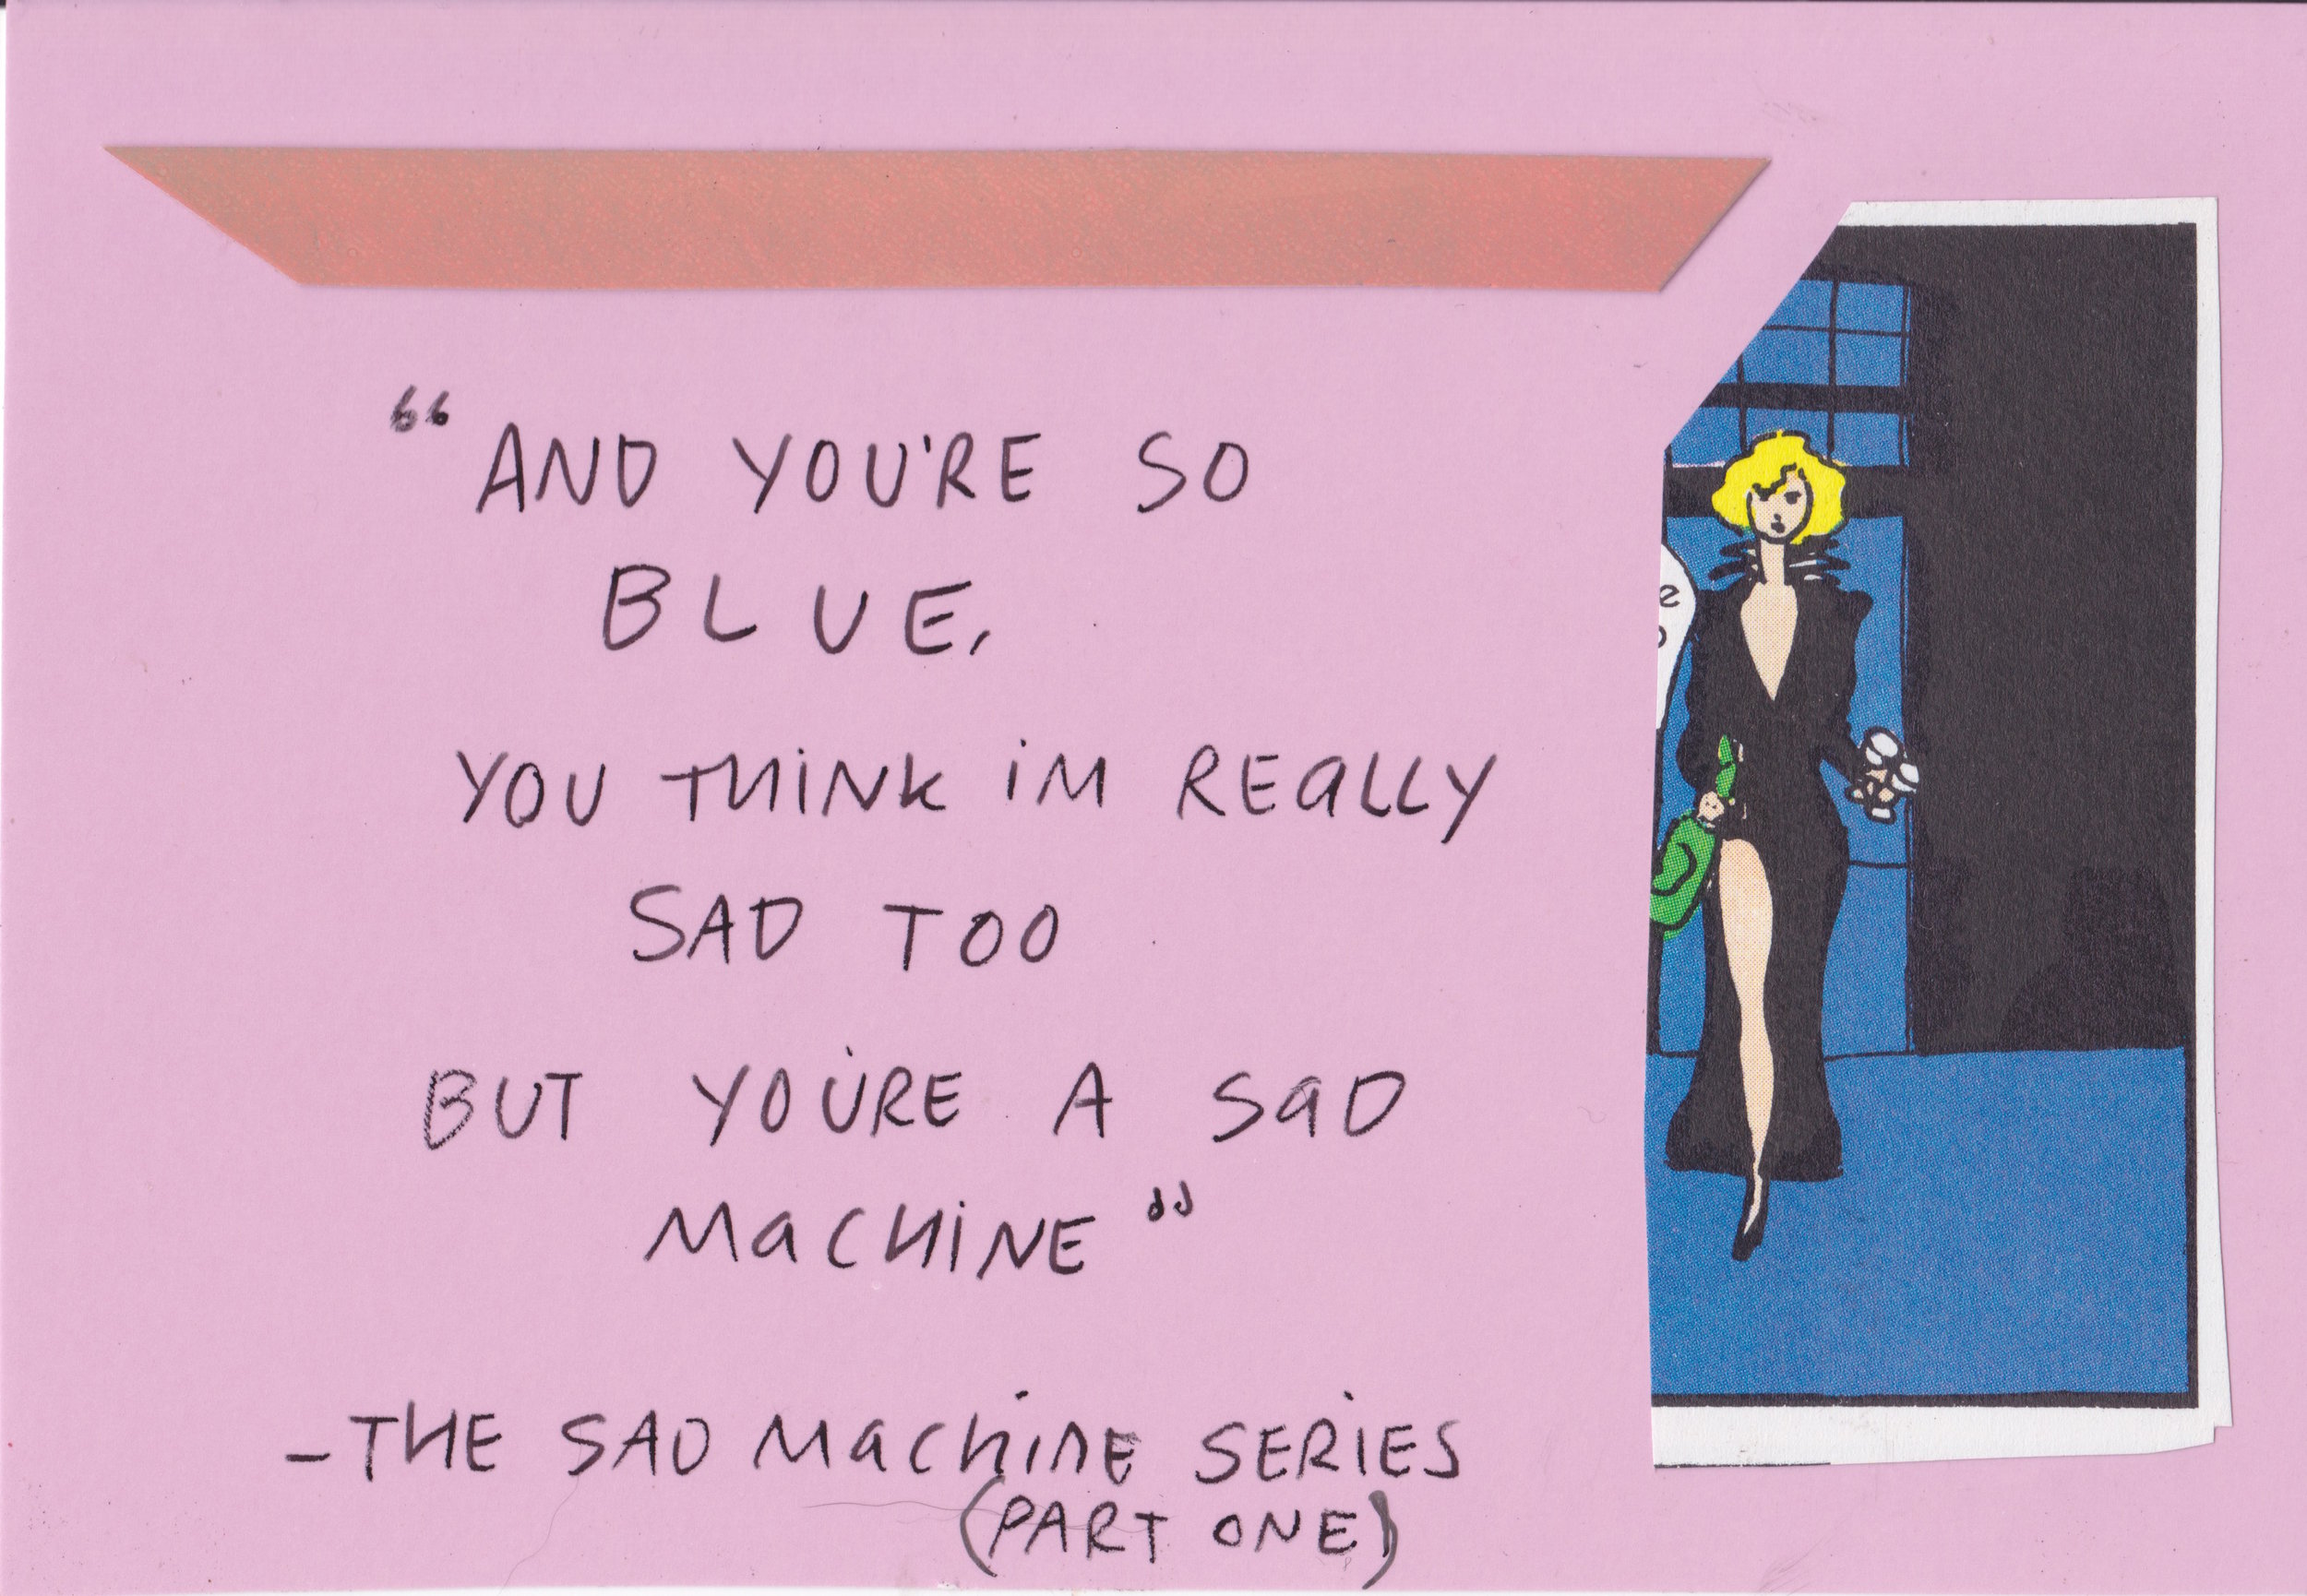 Sad Machine Series Quotes 2.jpeg